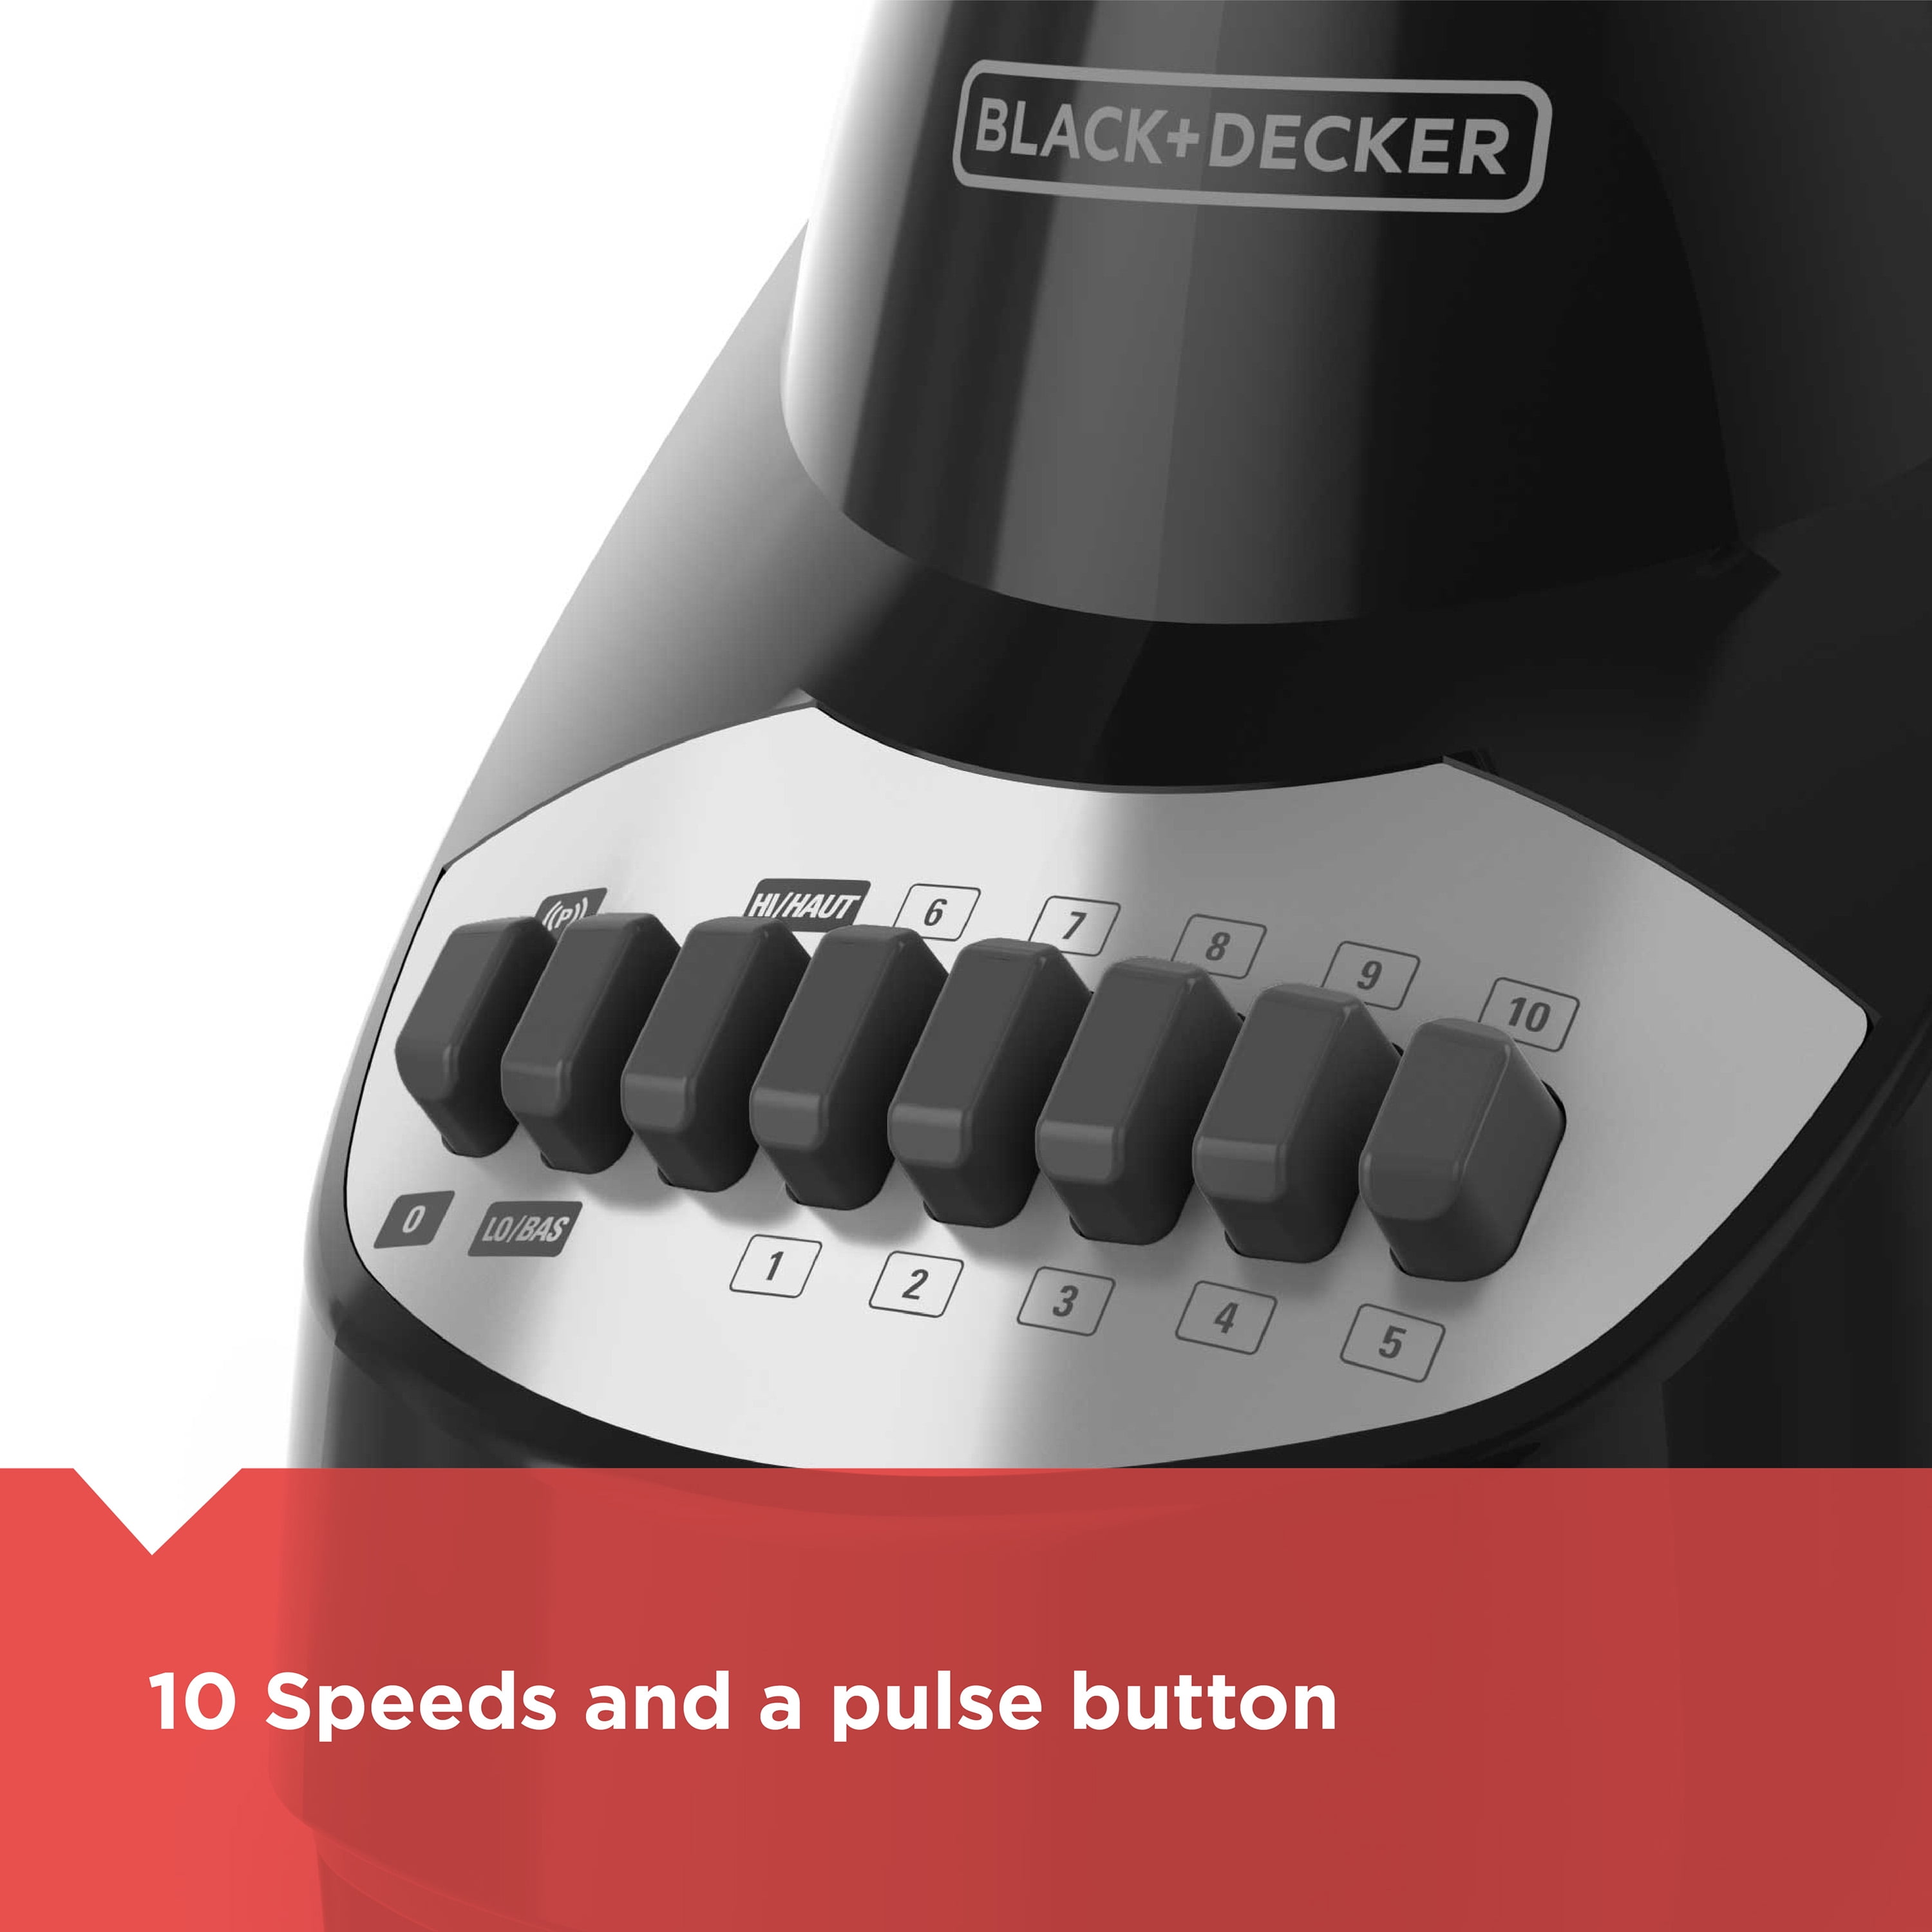 BLACK + DECKER (BLACK & DECKER) 10-Speed Blender, Black.